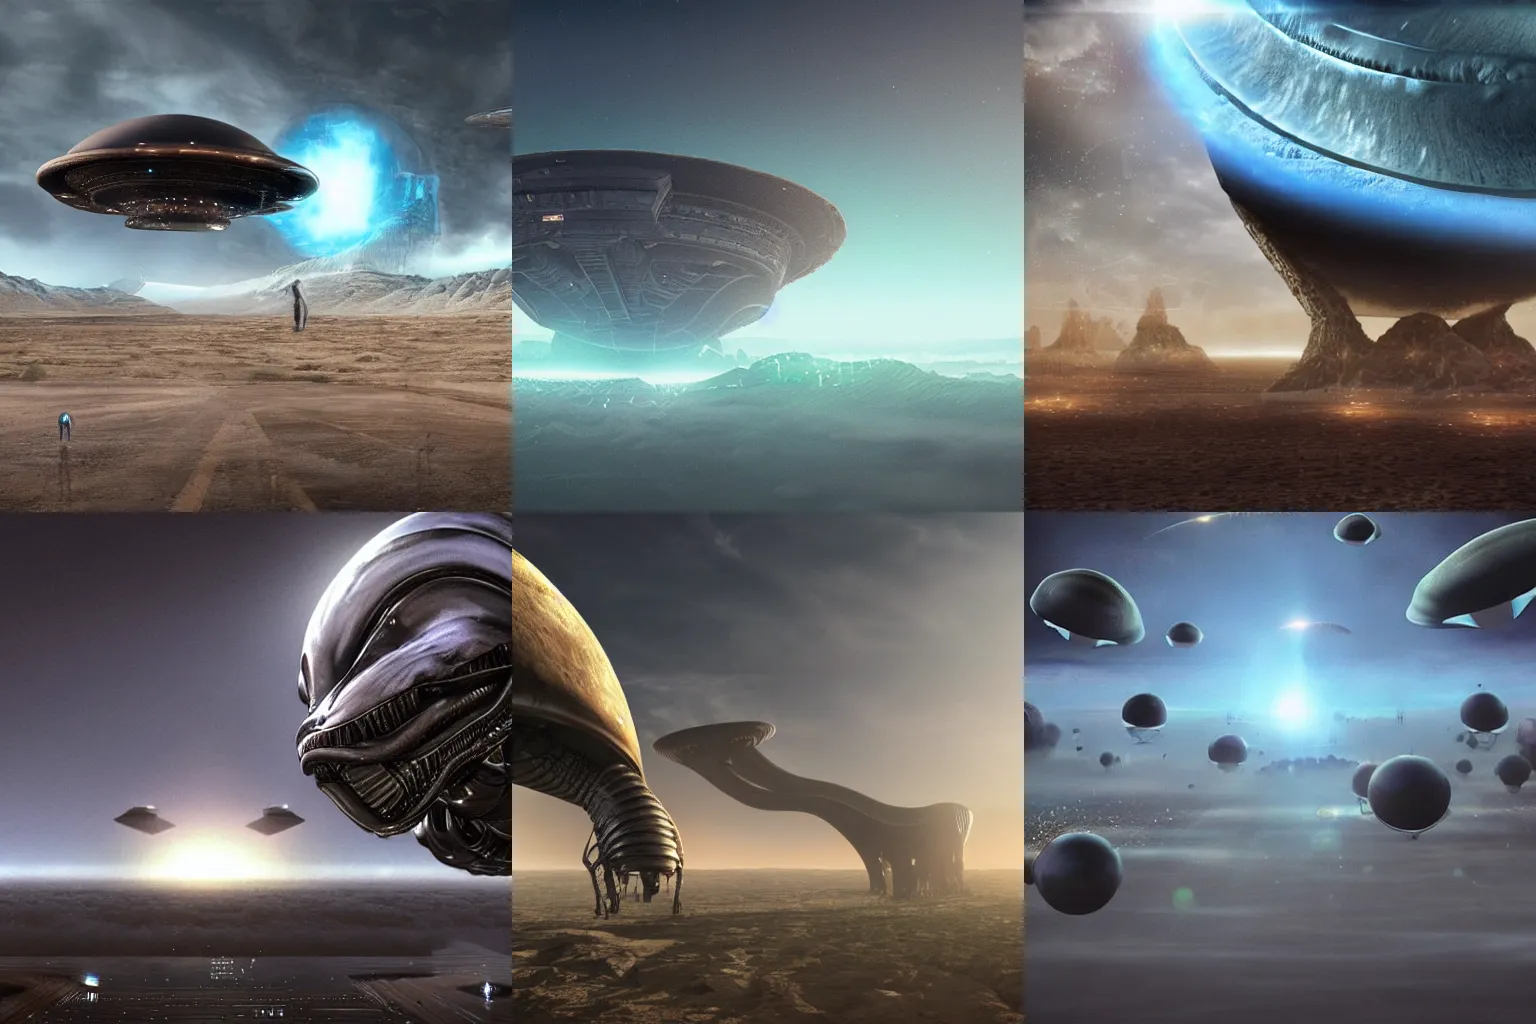 Prompt: aliens invading earth, hyperrealistic render